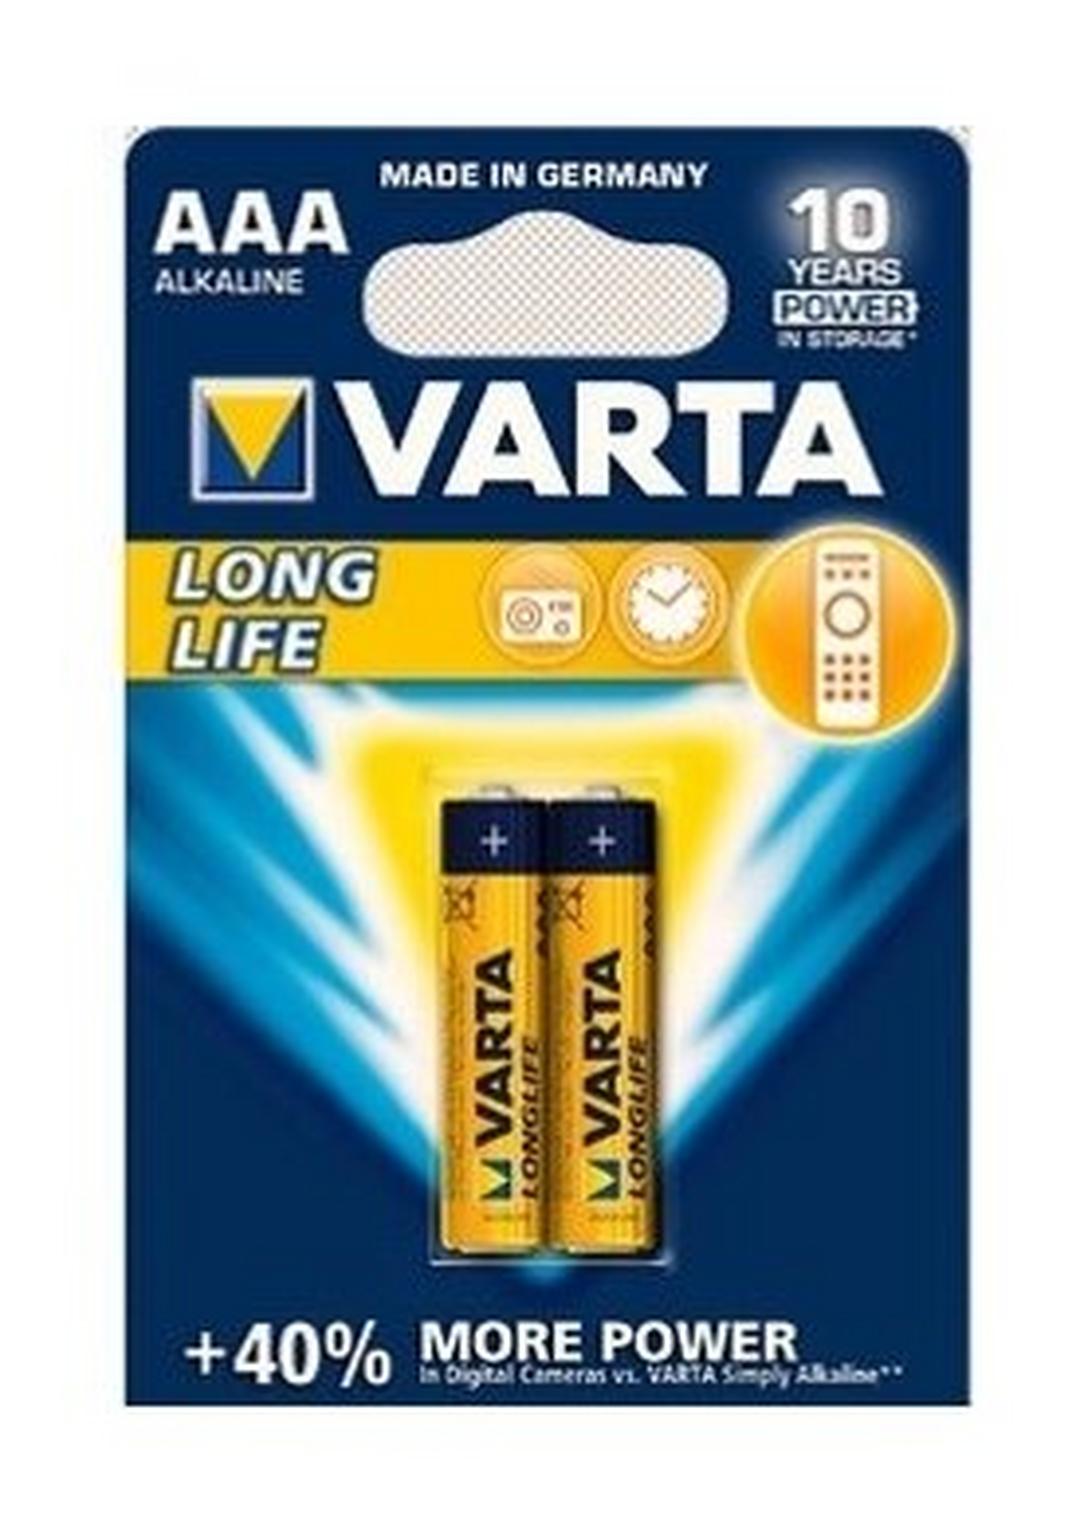 Varta LL 2 AAA Alkaline Battery - 2 Pcs